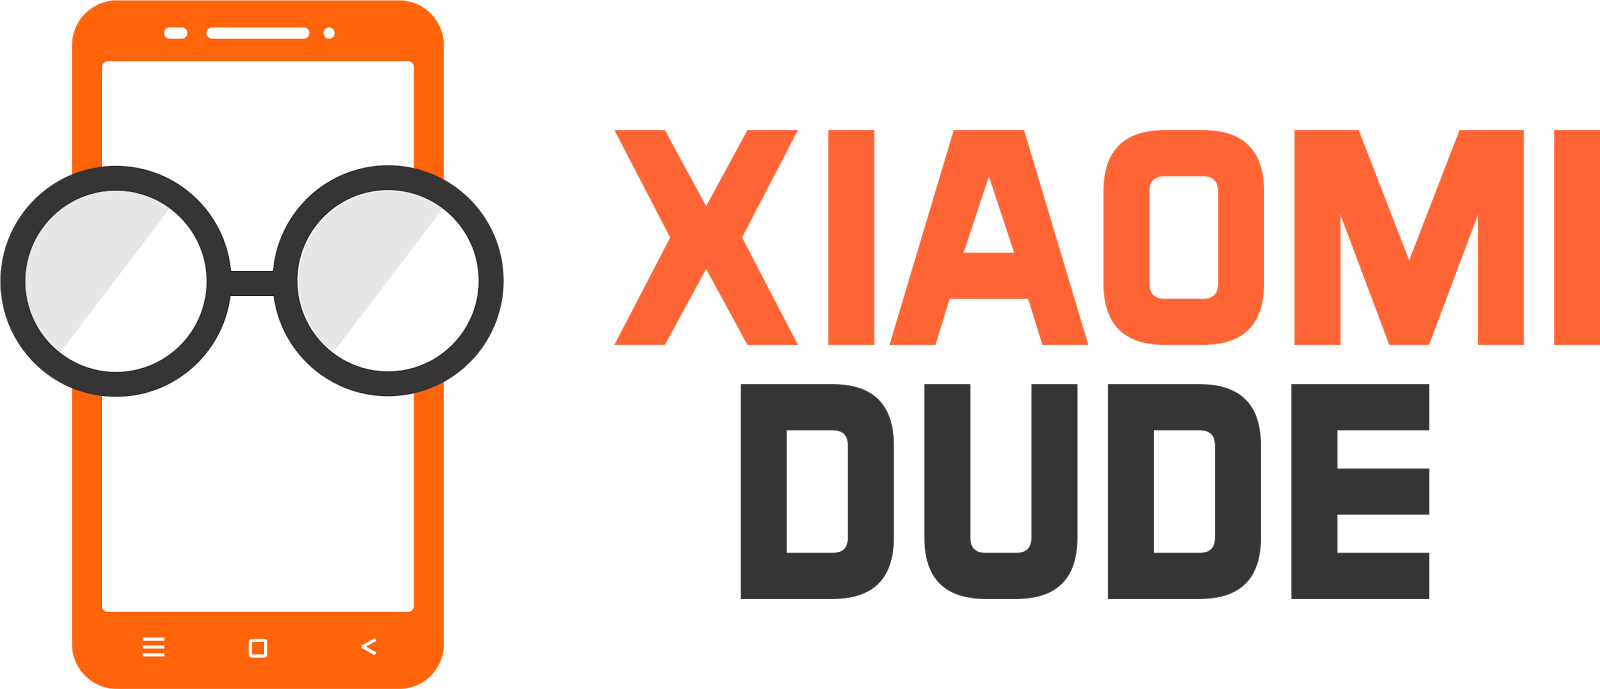 Xiaomi Dude - News, Reviews, Tips On Xiaomi And MIUI